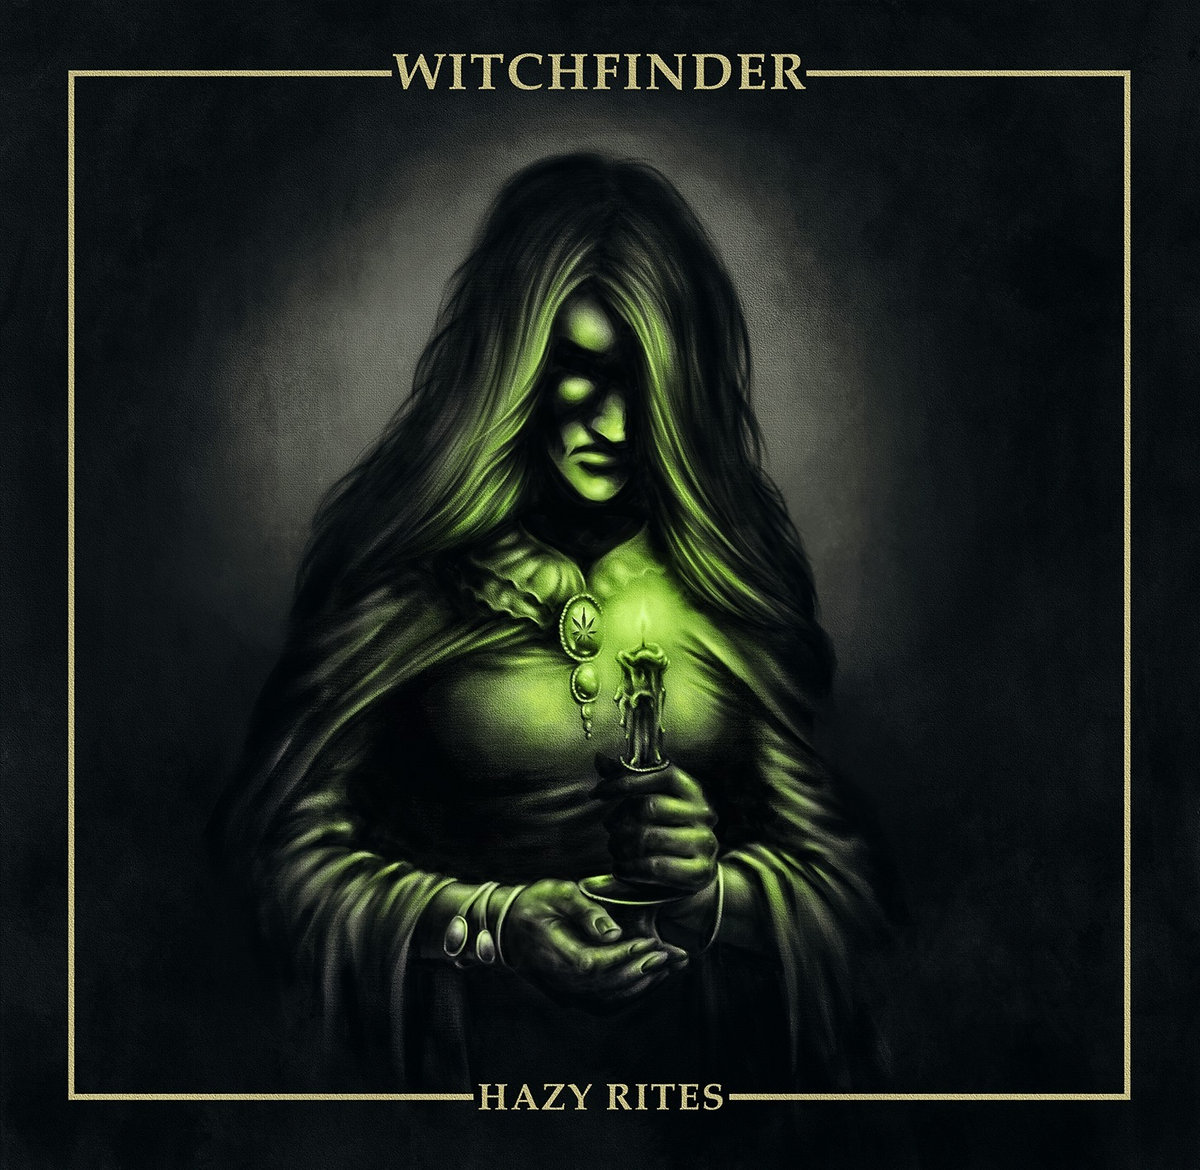 Hazy_rites_album_cover_witchfinder